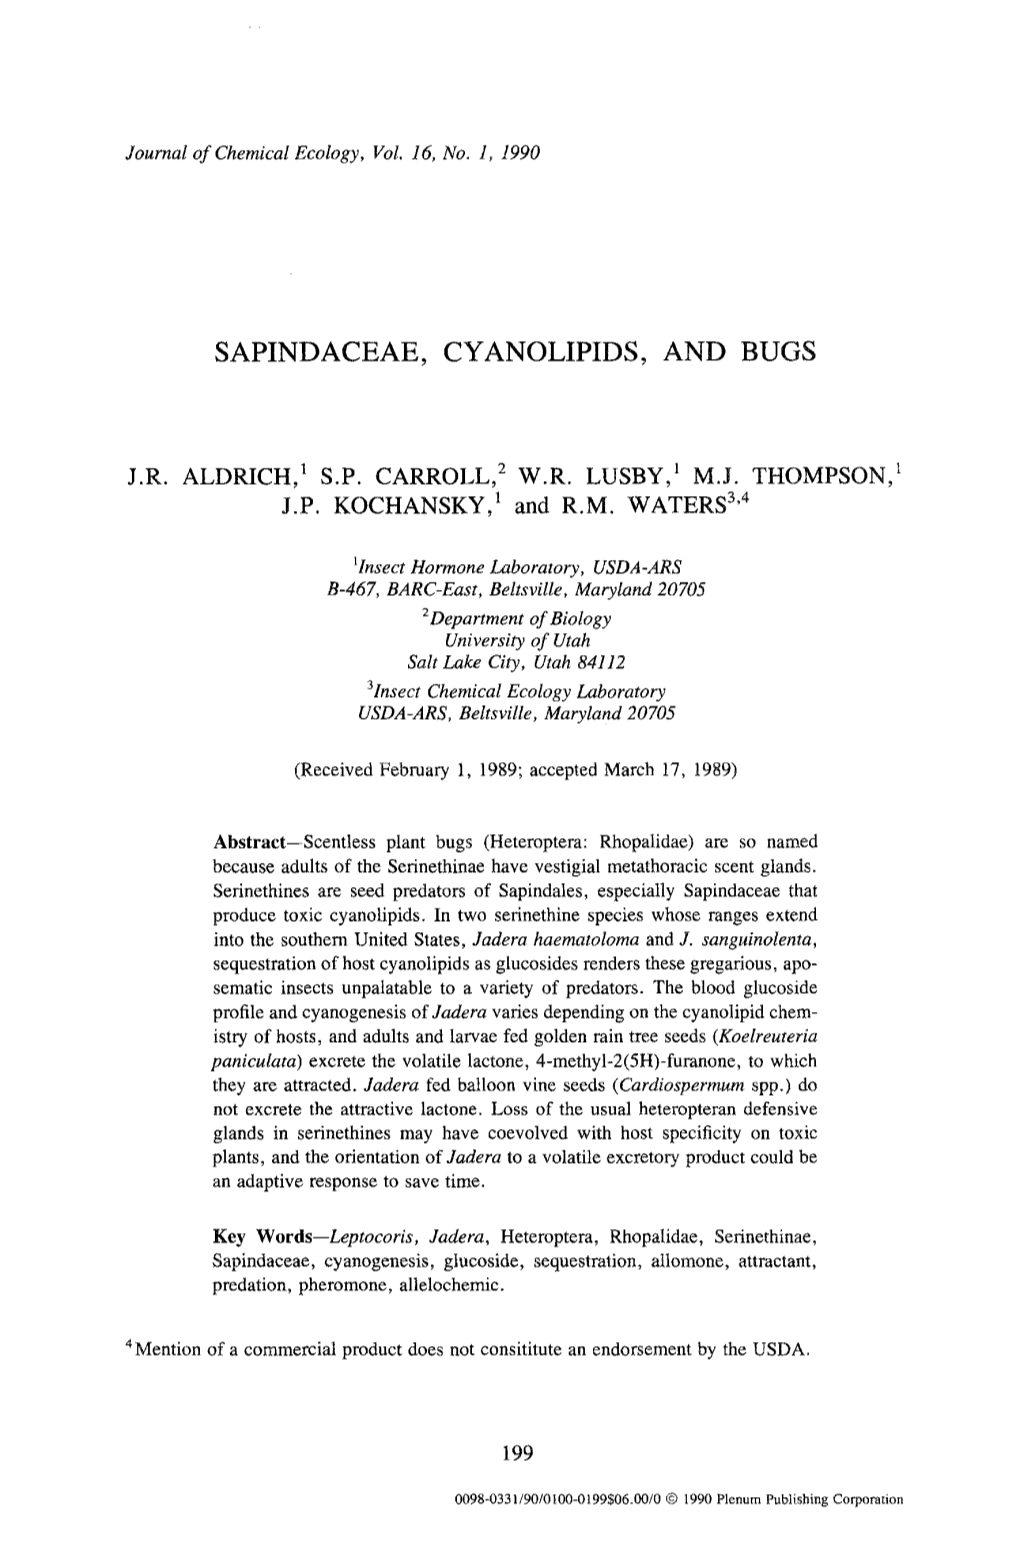 Sapindaceae, Cyanolipids, and Bugs